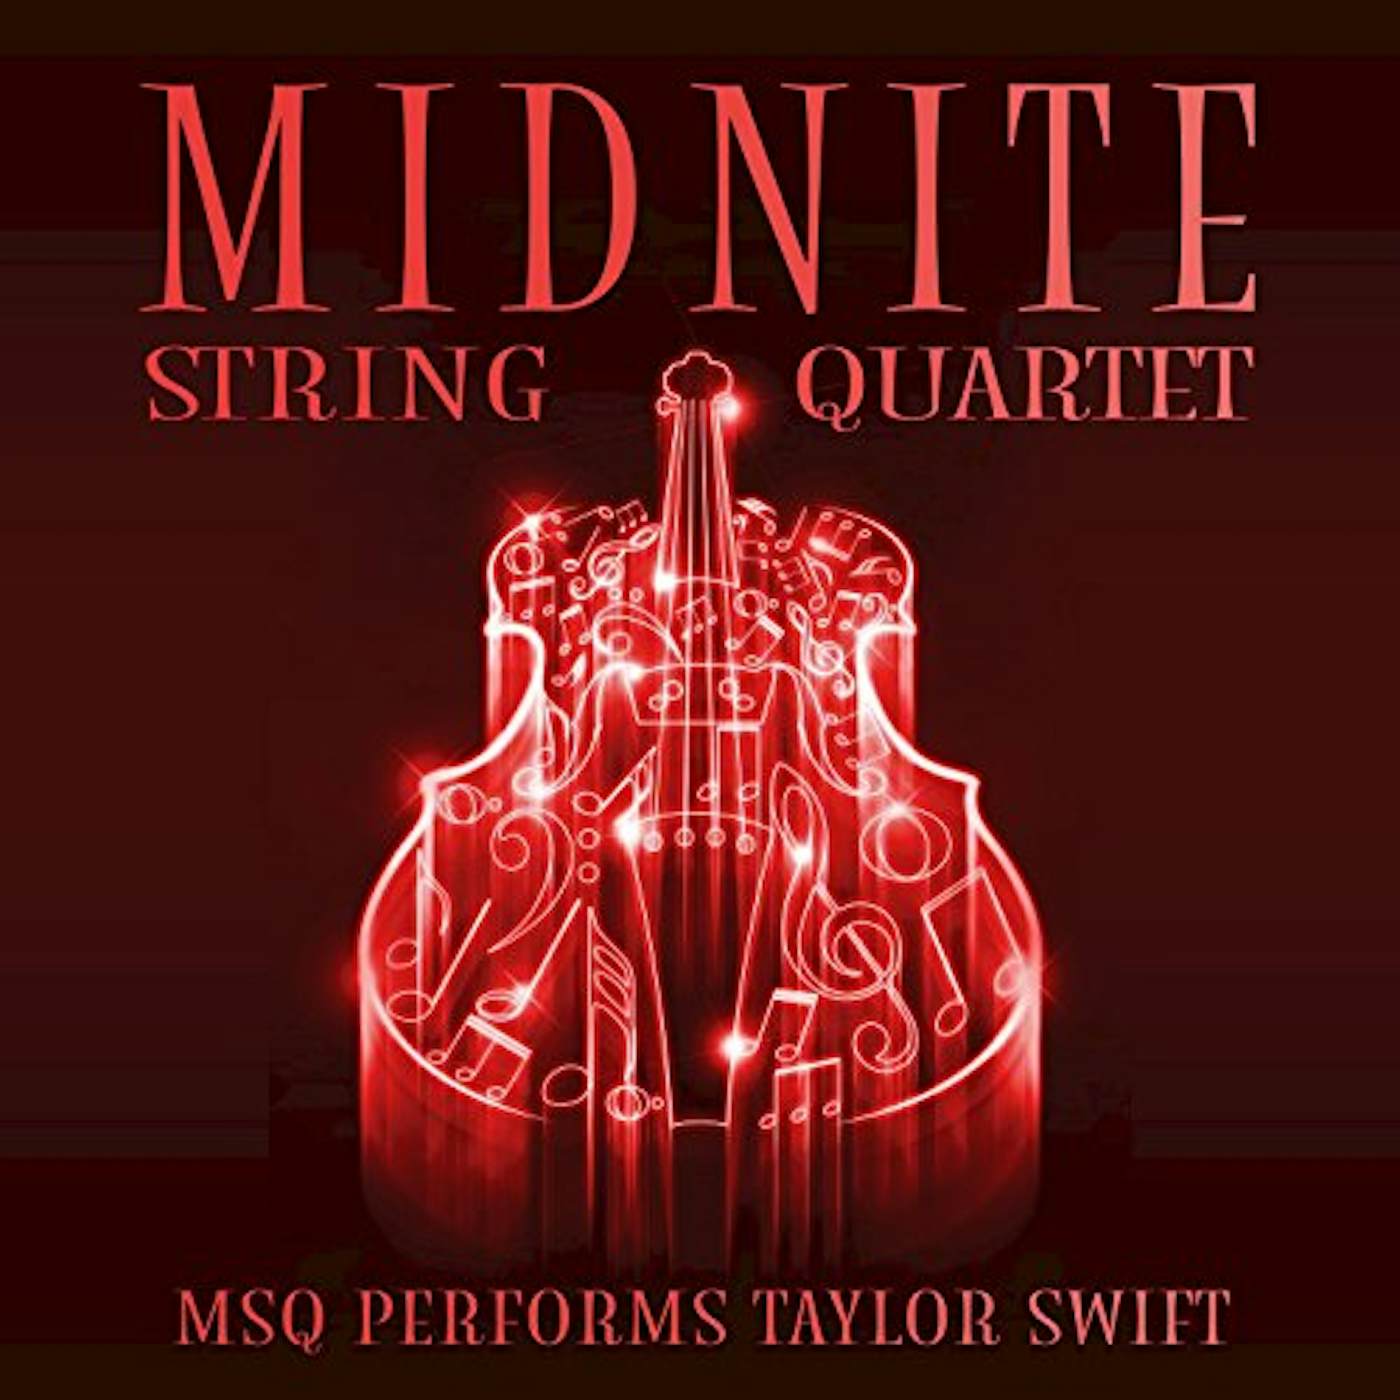 Midnite String Quartet MSQ PERFORMS TAYLOR SWIFT CD